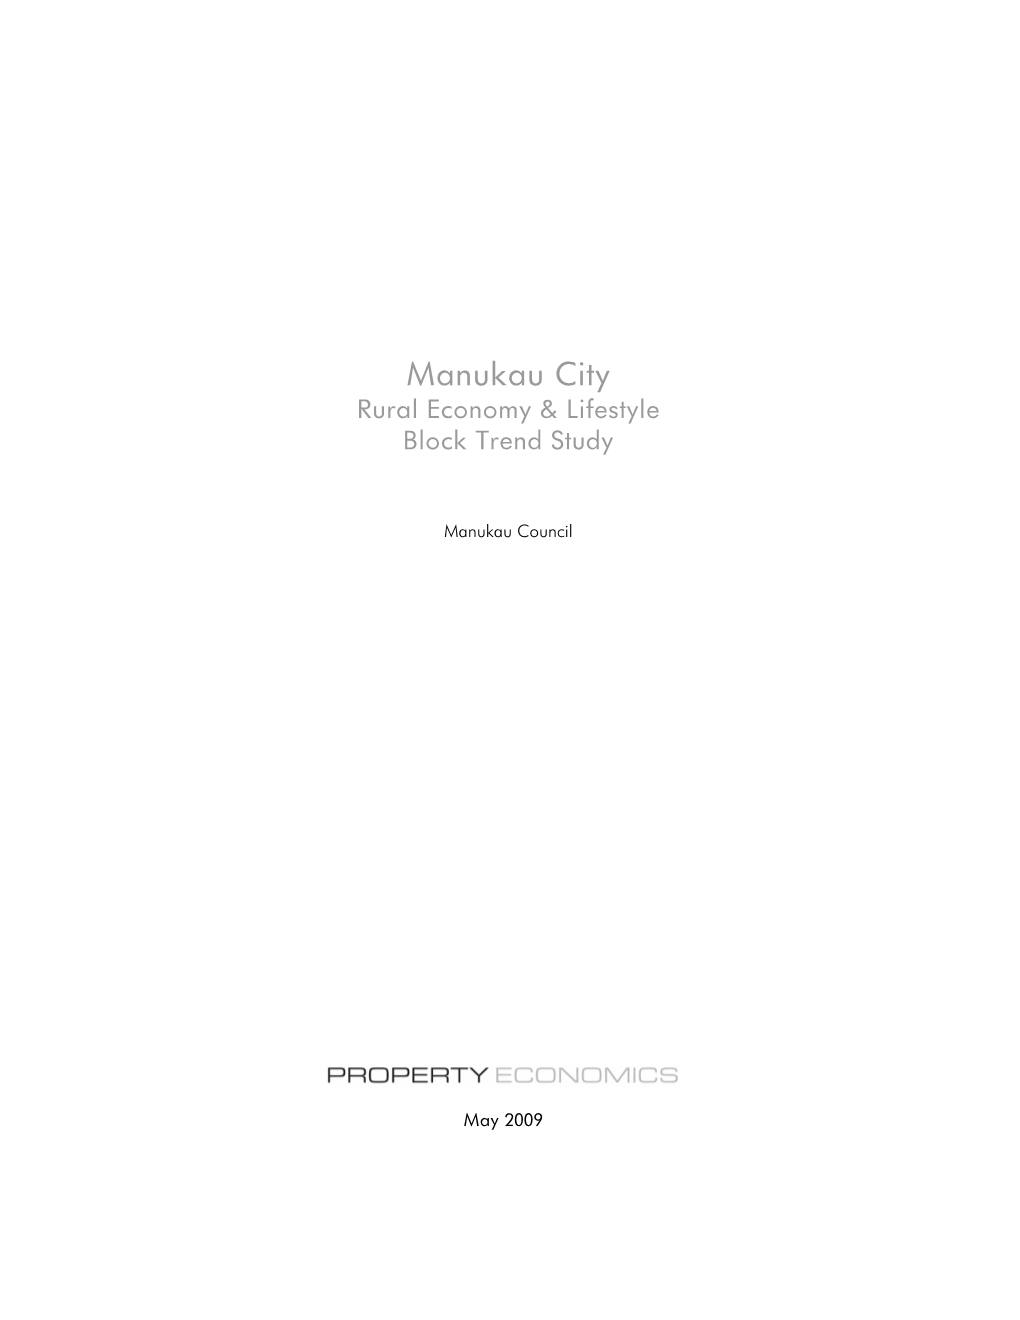 Manukau City Rural Economy & Lifestyle Block Trend Study